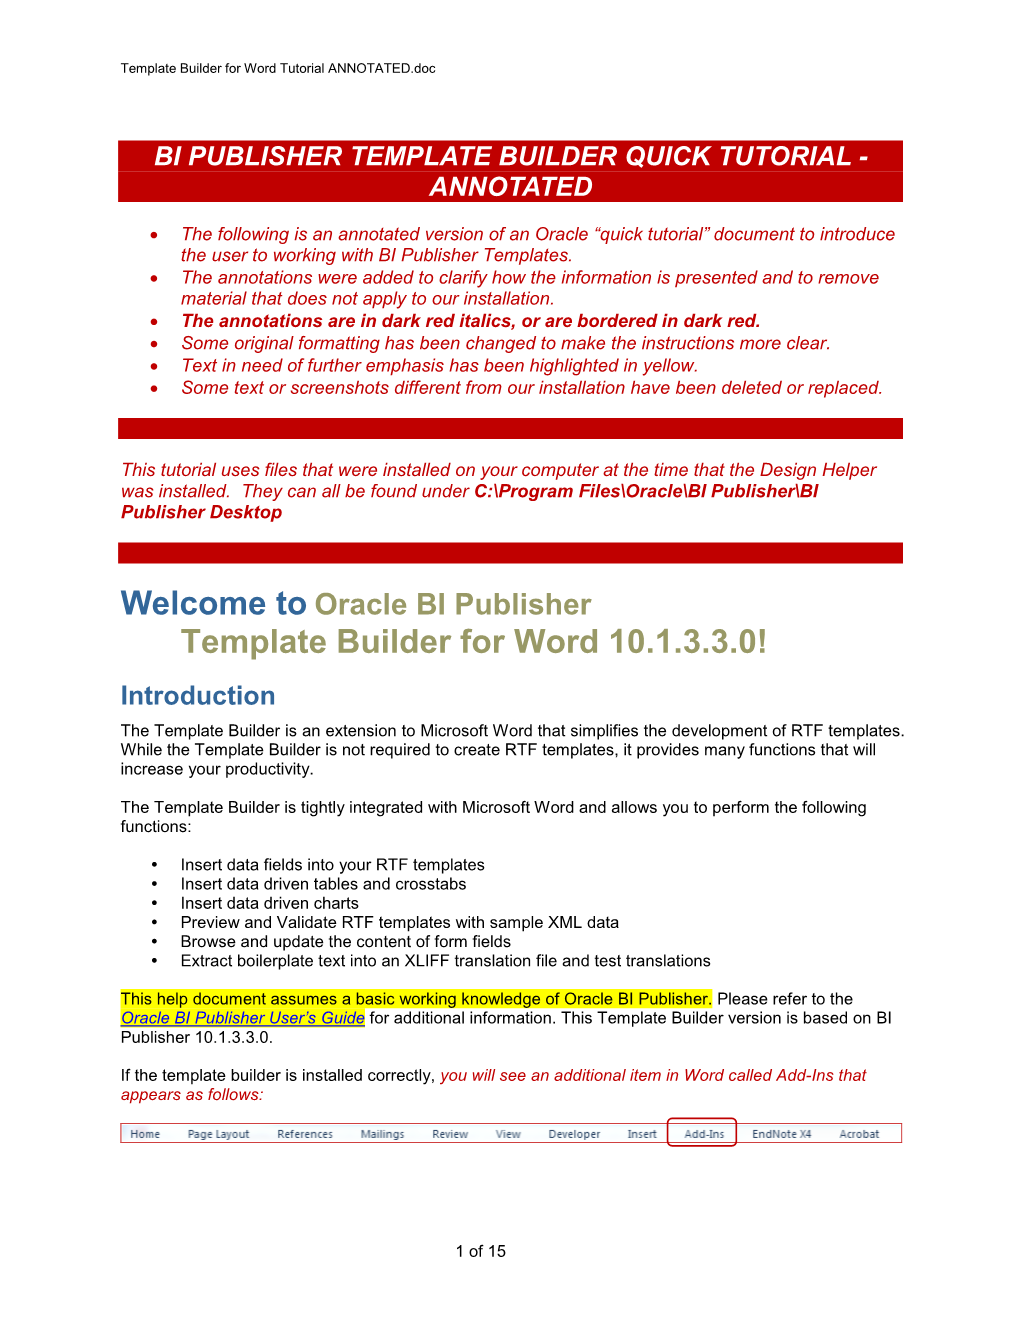 BI Publisher Template Builder for Word Tutorial